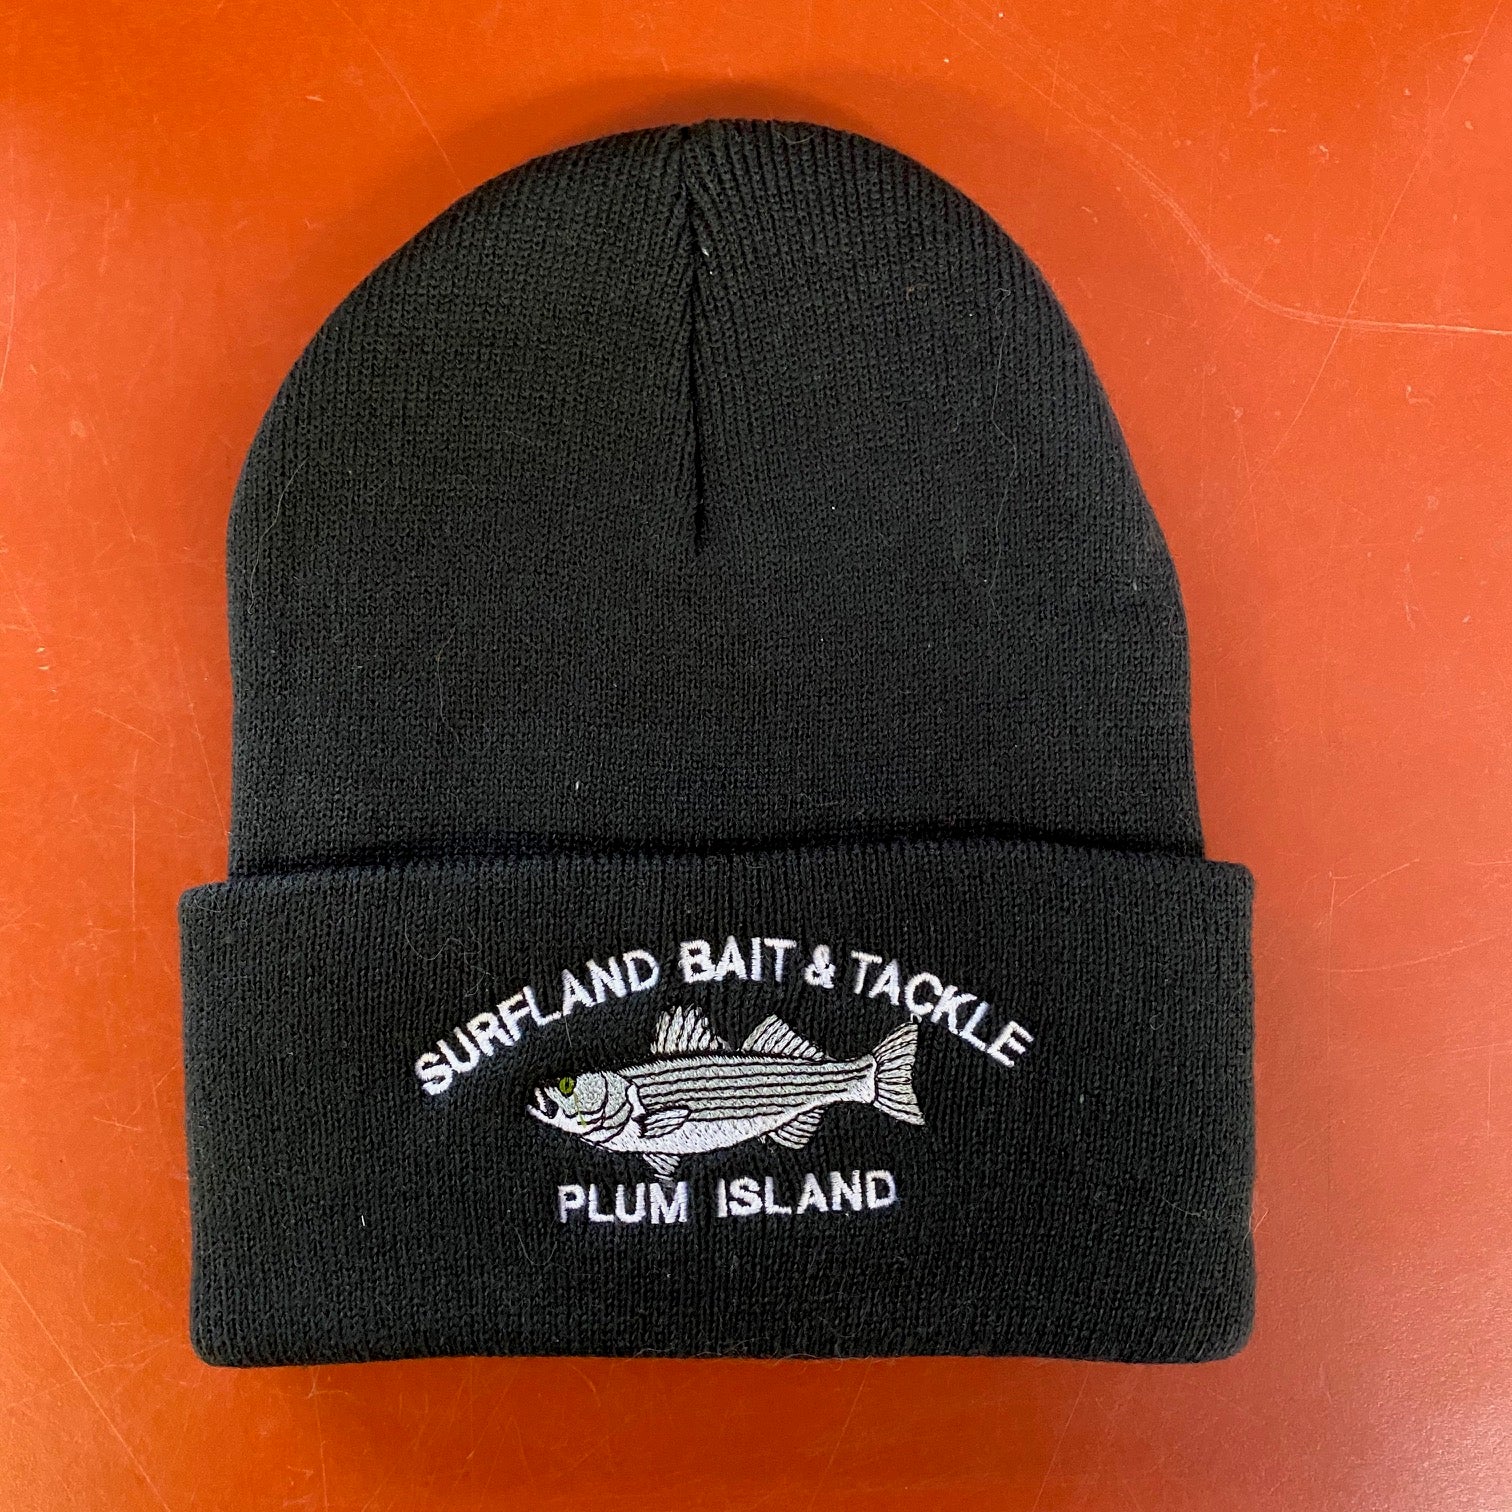 Surfland Gear - Knit Cap